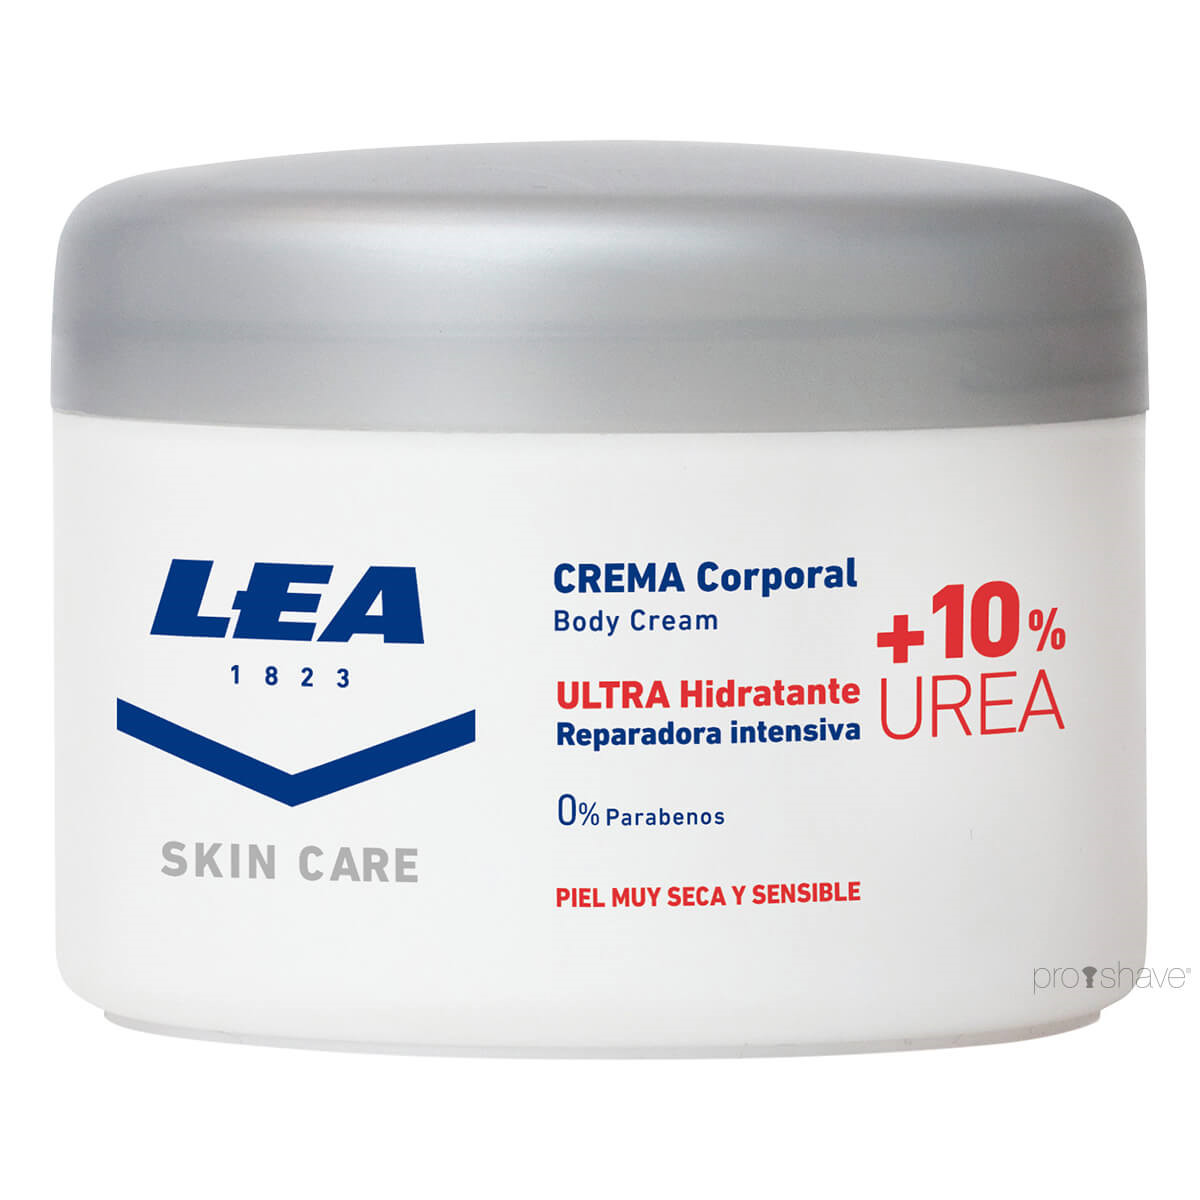 Billede af LEA Body Creme, 10% Urea, 200 ml.